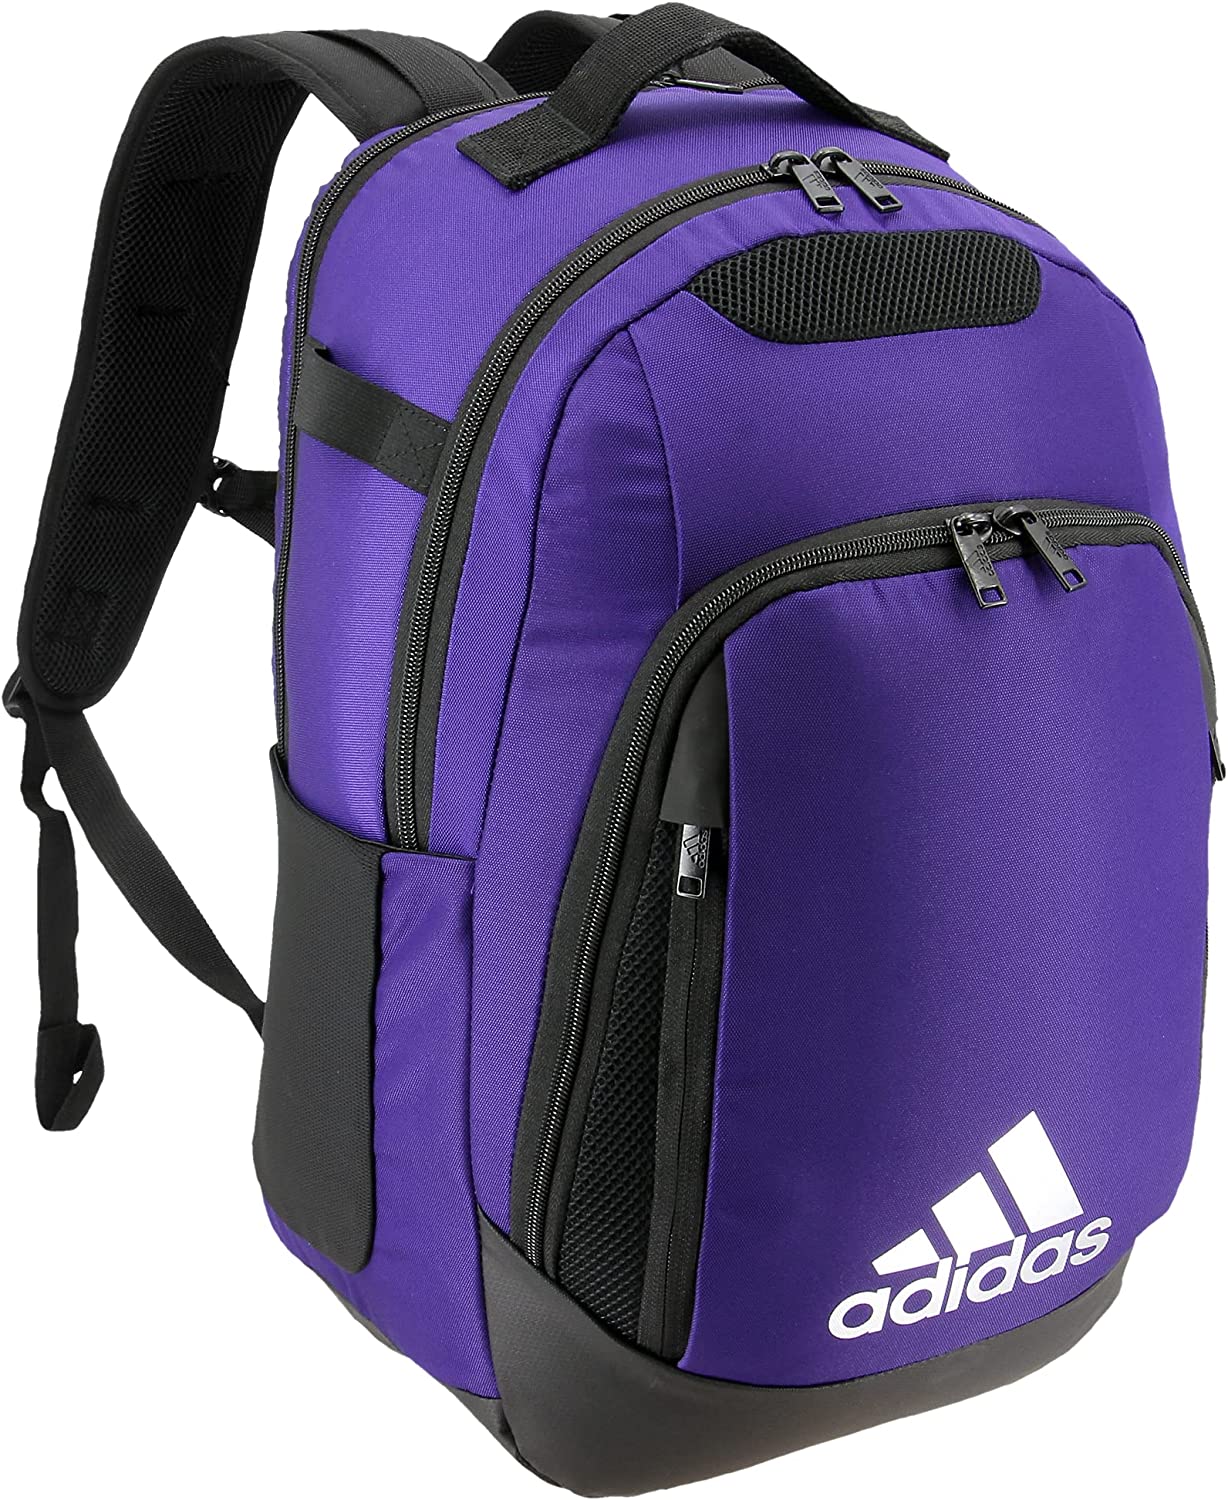 købmand tårn Hviske Adidas 5 Star Backpack (Team Collegiate Purple)